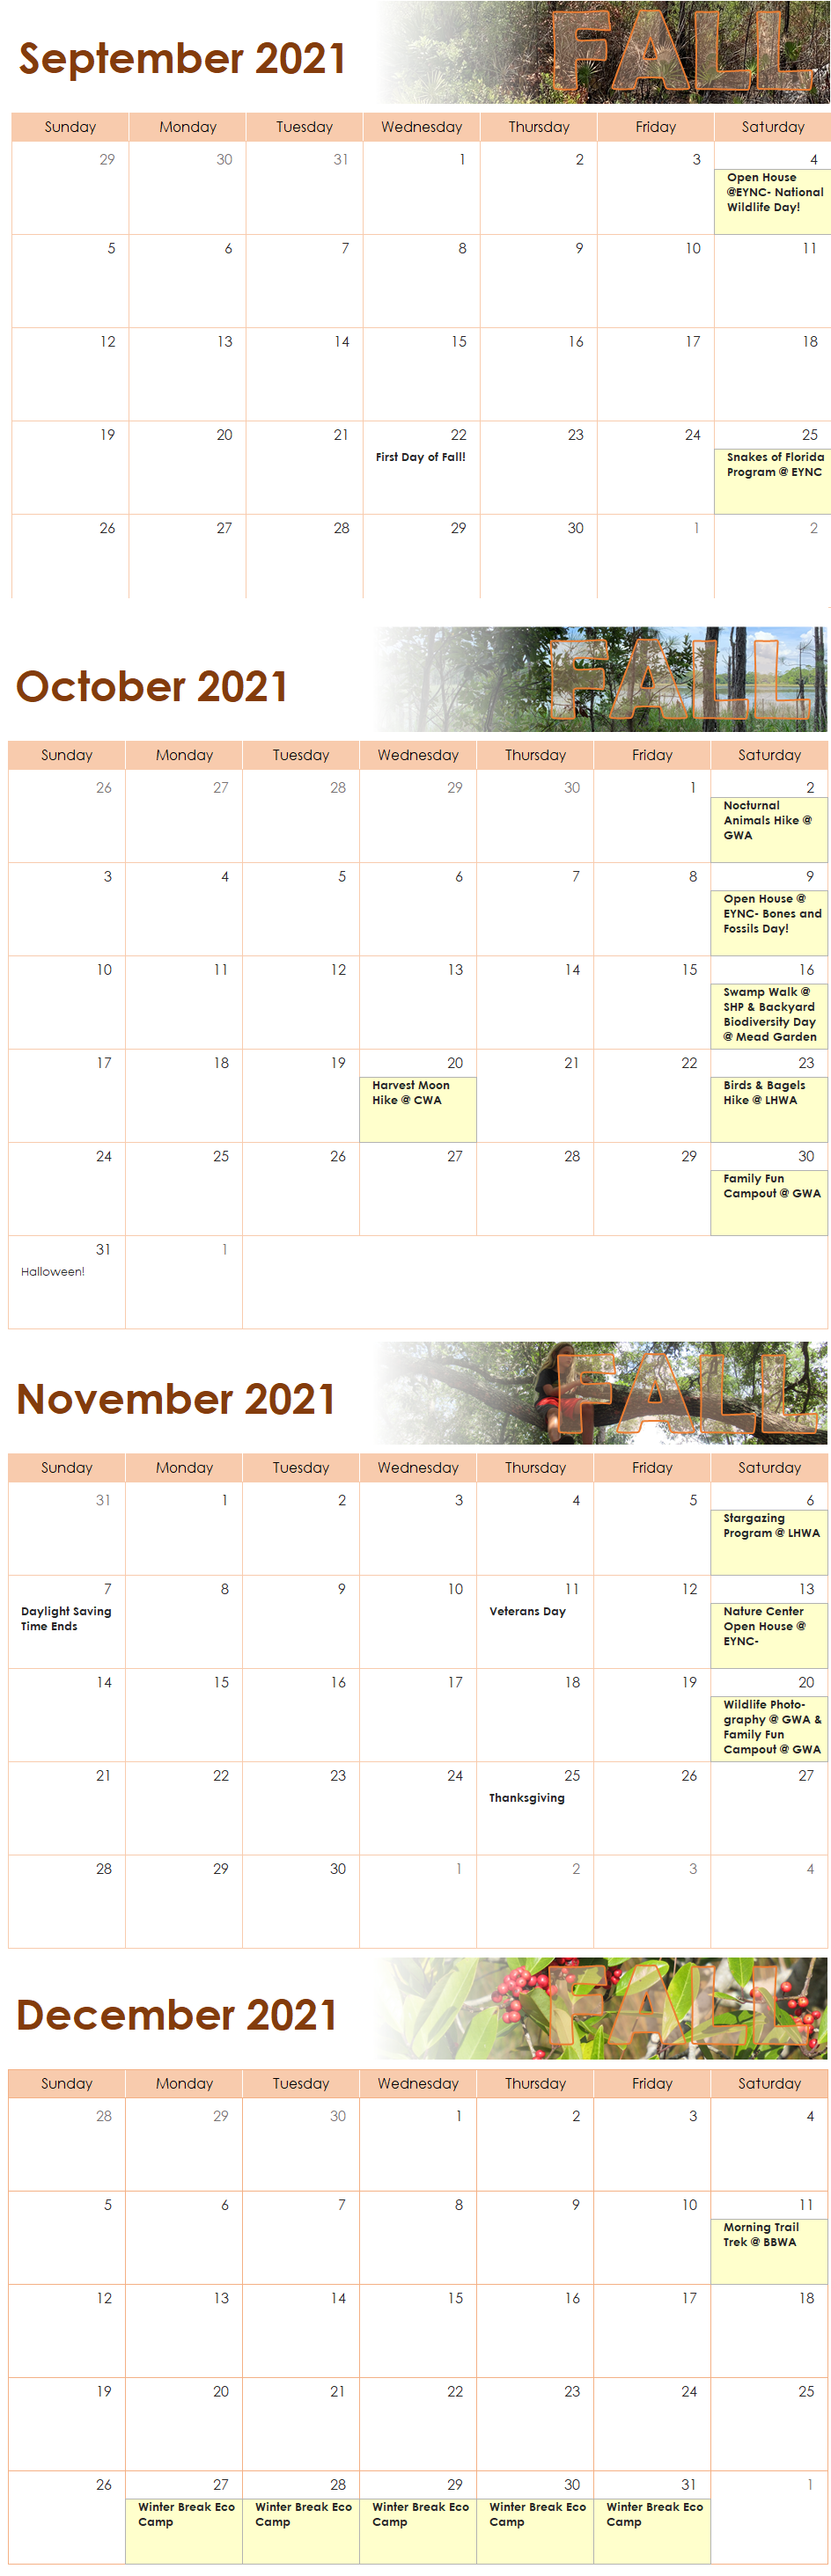 2021 Fall Event Calendars